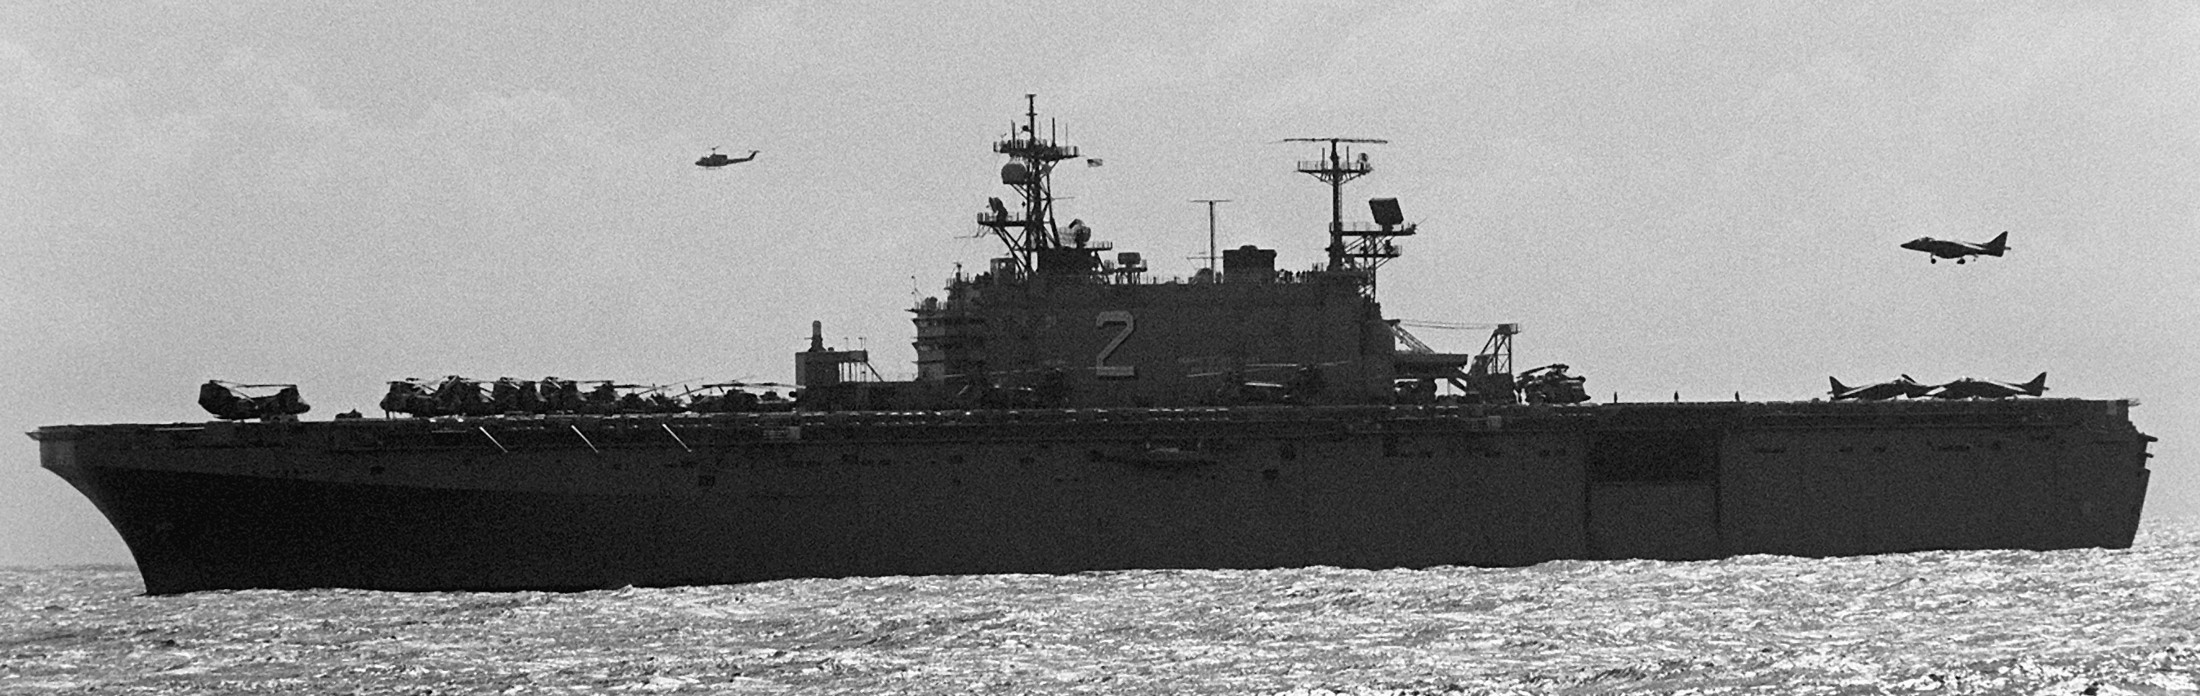 lha-2 uss saipan tarawa class amphibious assault ship us navy 22nd meu hmm-261 usmc fleet ex 90 69